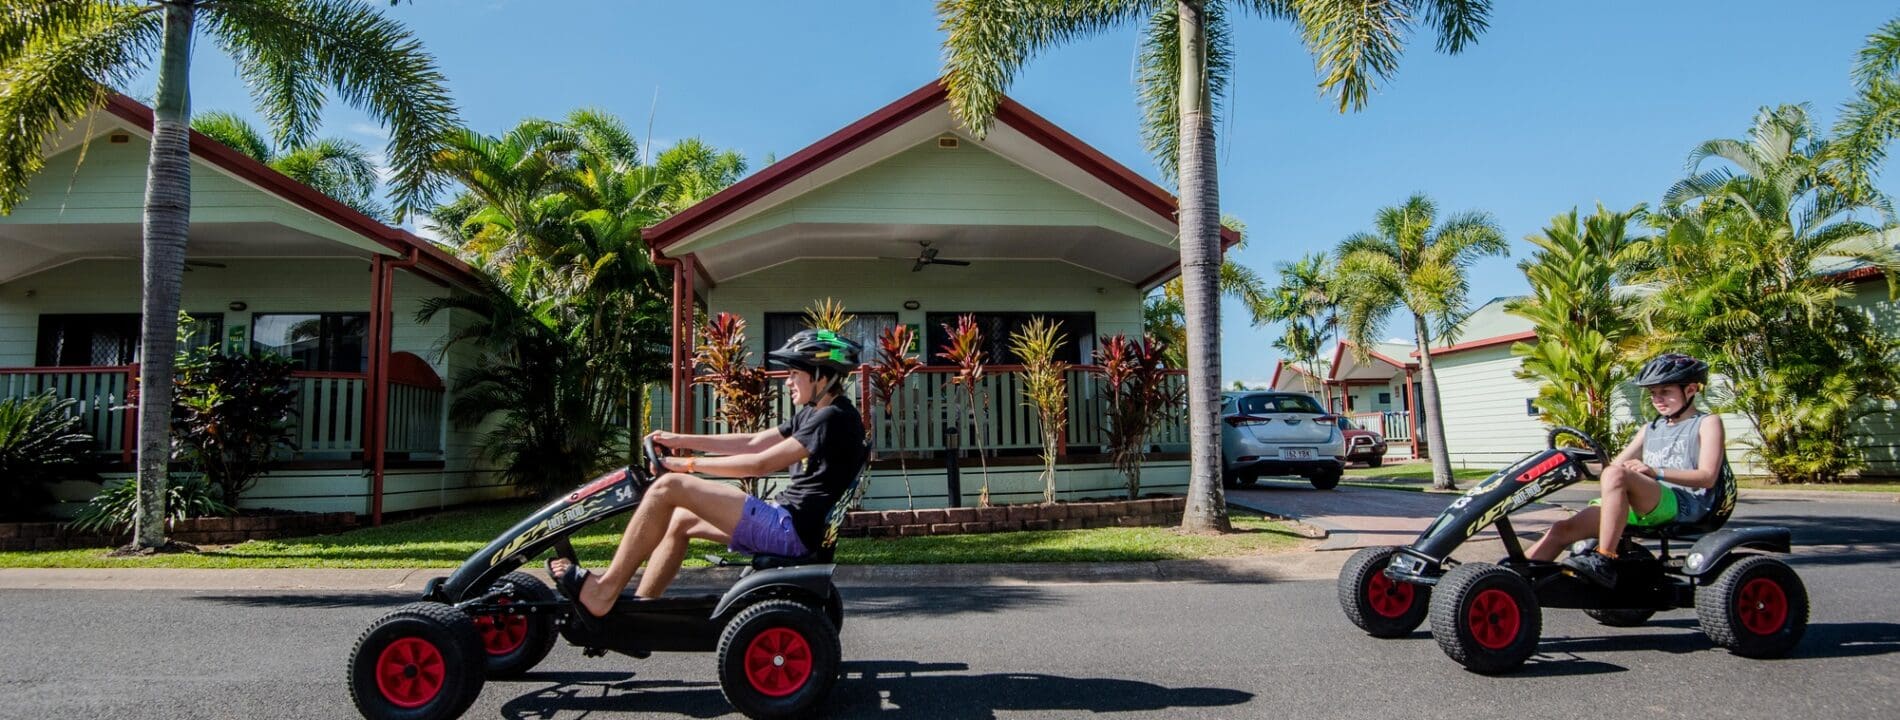 ingenia-holidays-cairns-coconut-bikes